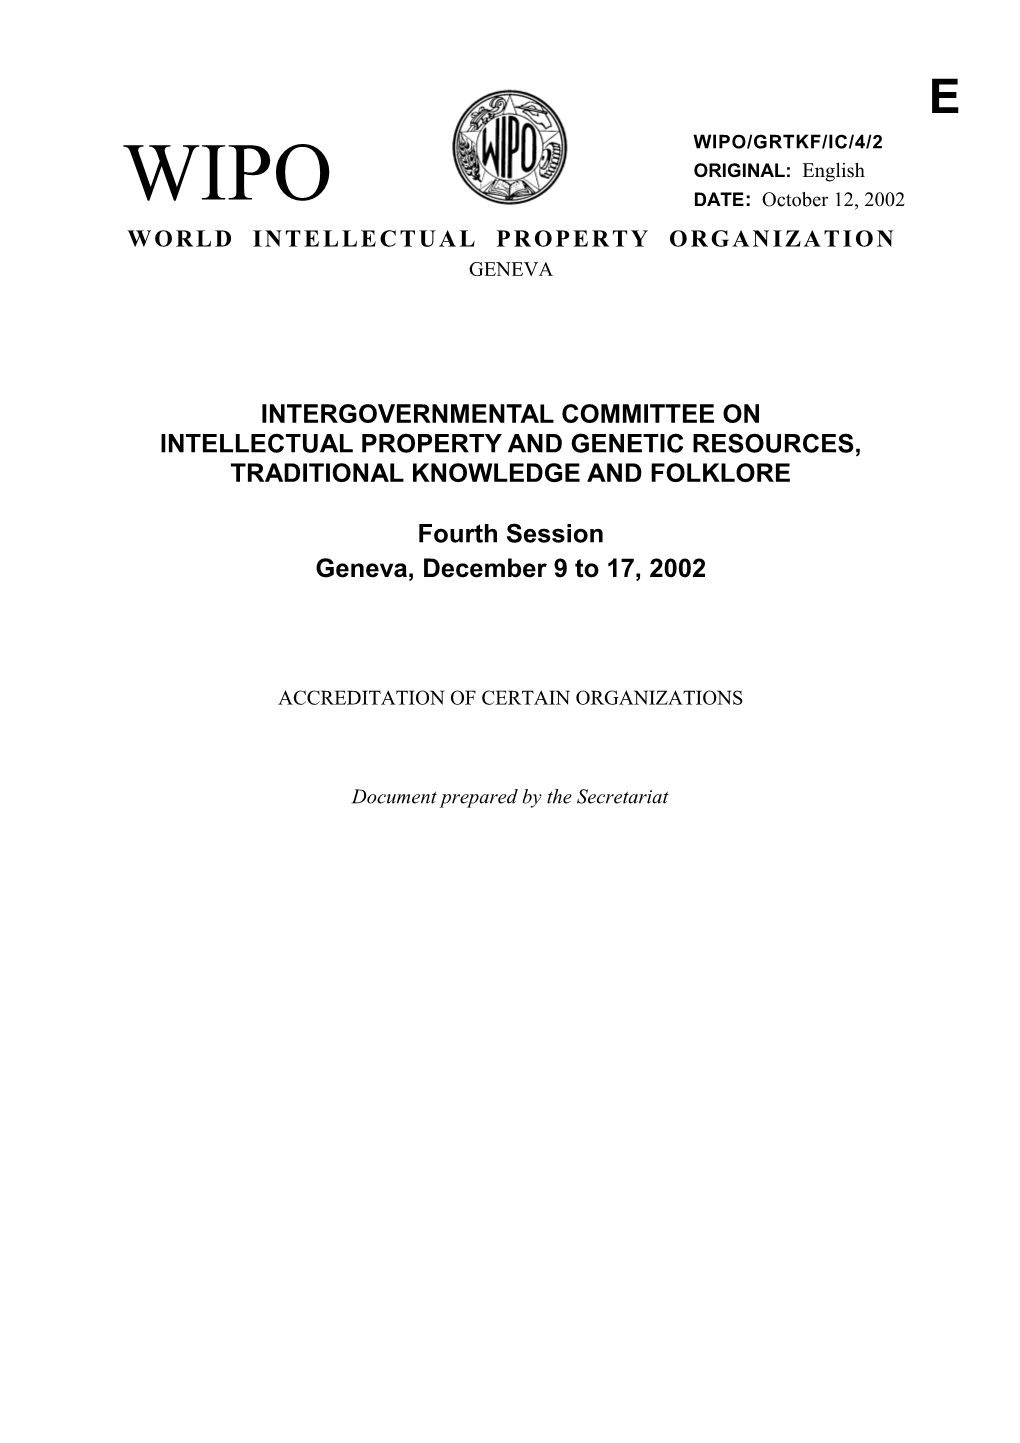 WIPO/GRTKF/IC/4/2: Accreditation of Certain Organizations